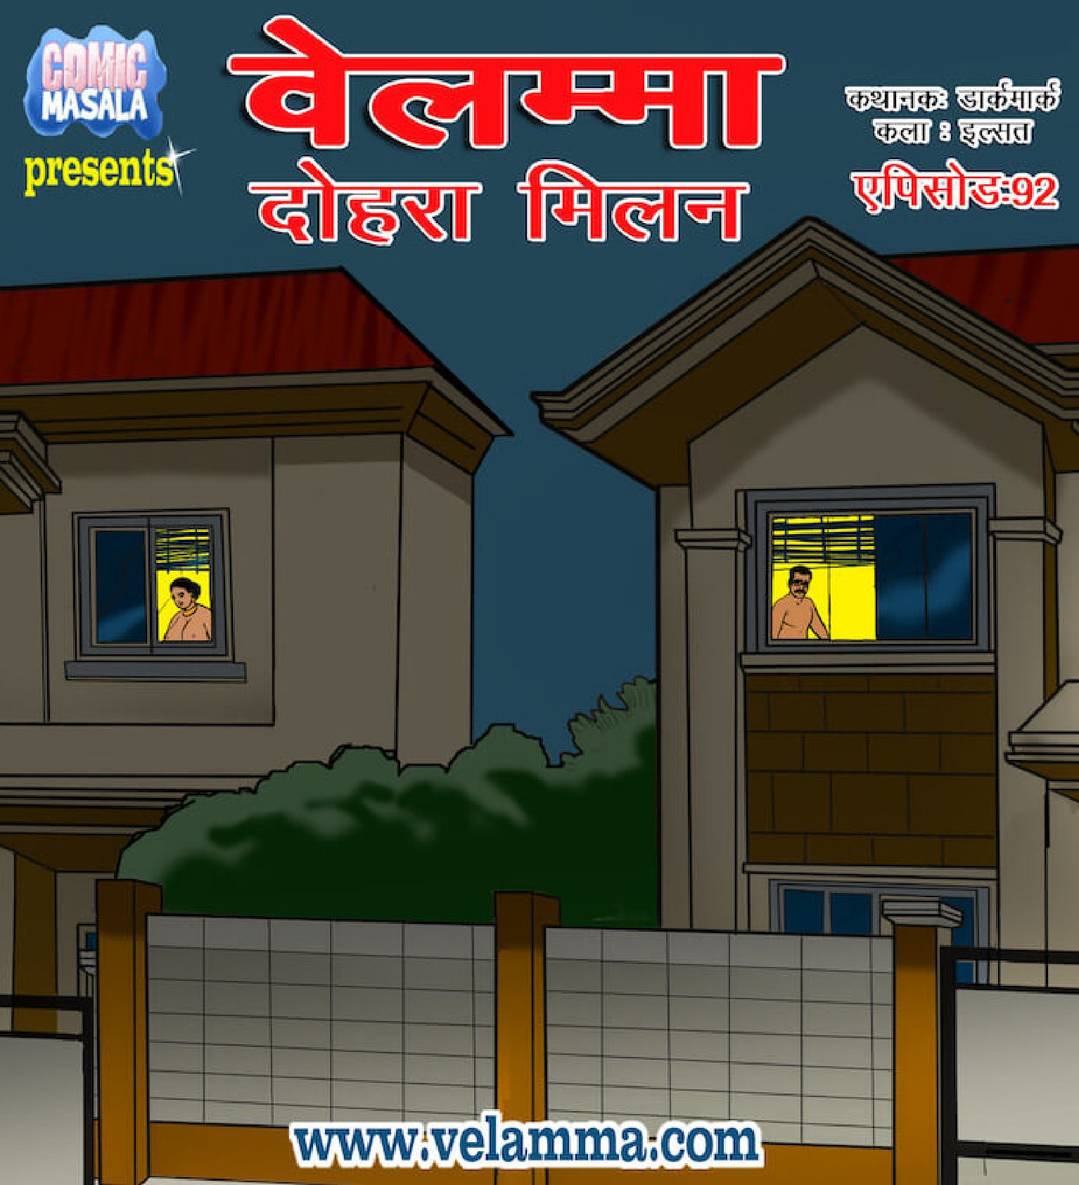 Velamma Episode 92 Hindi – Dohra milan (दोहरा मिलन) - 43 - FSIComics